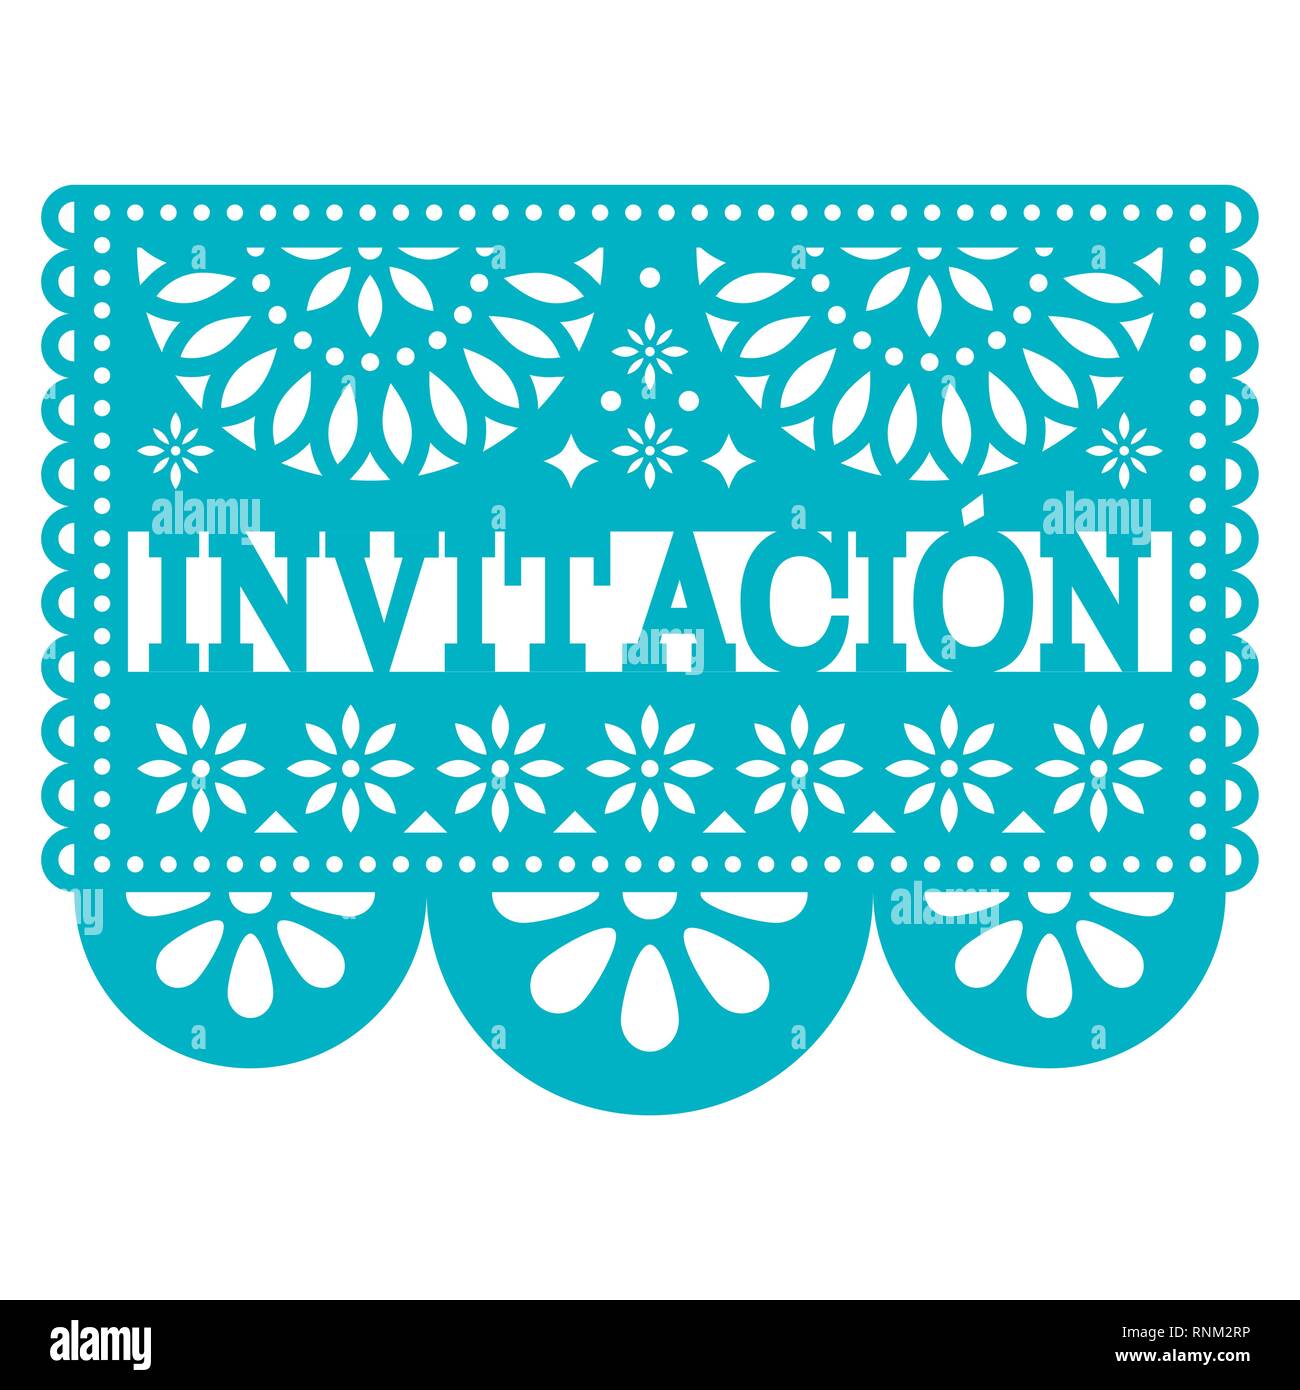 Invitacion Papel Picado  vector design - party invitation in Spanish, Mexican pattern greeting card Stock Vector